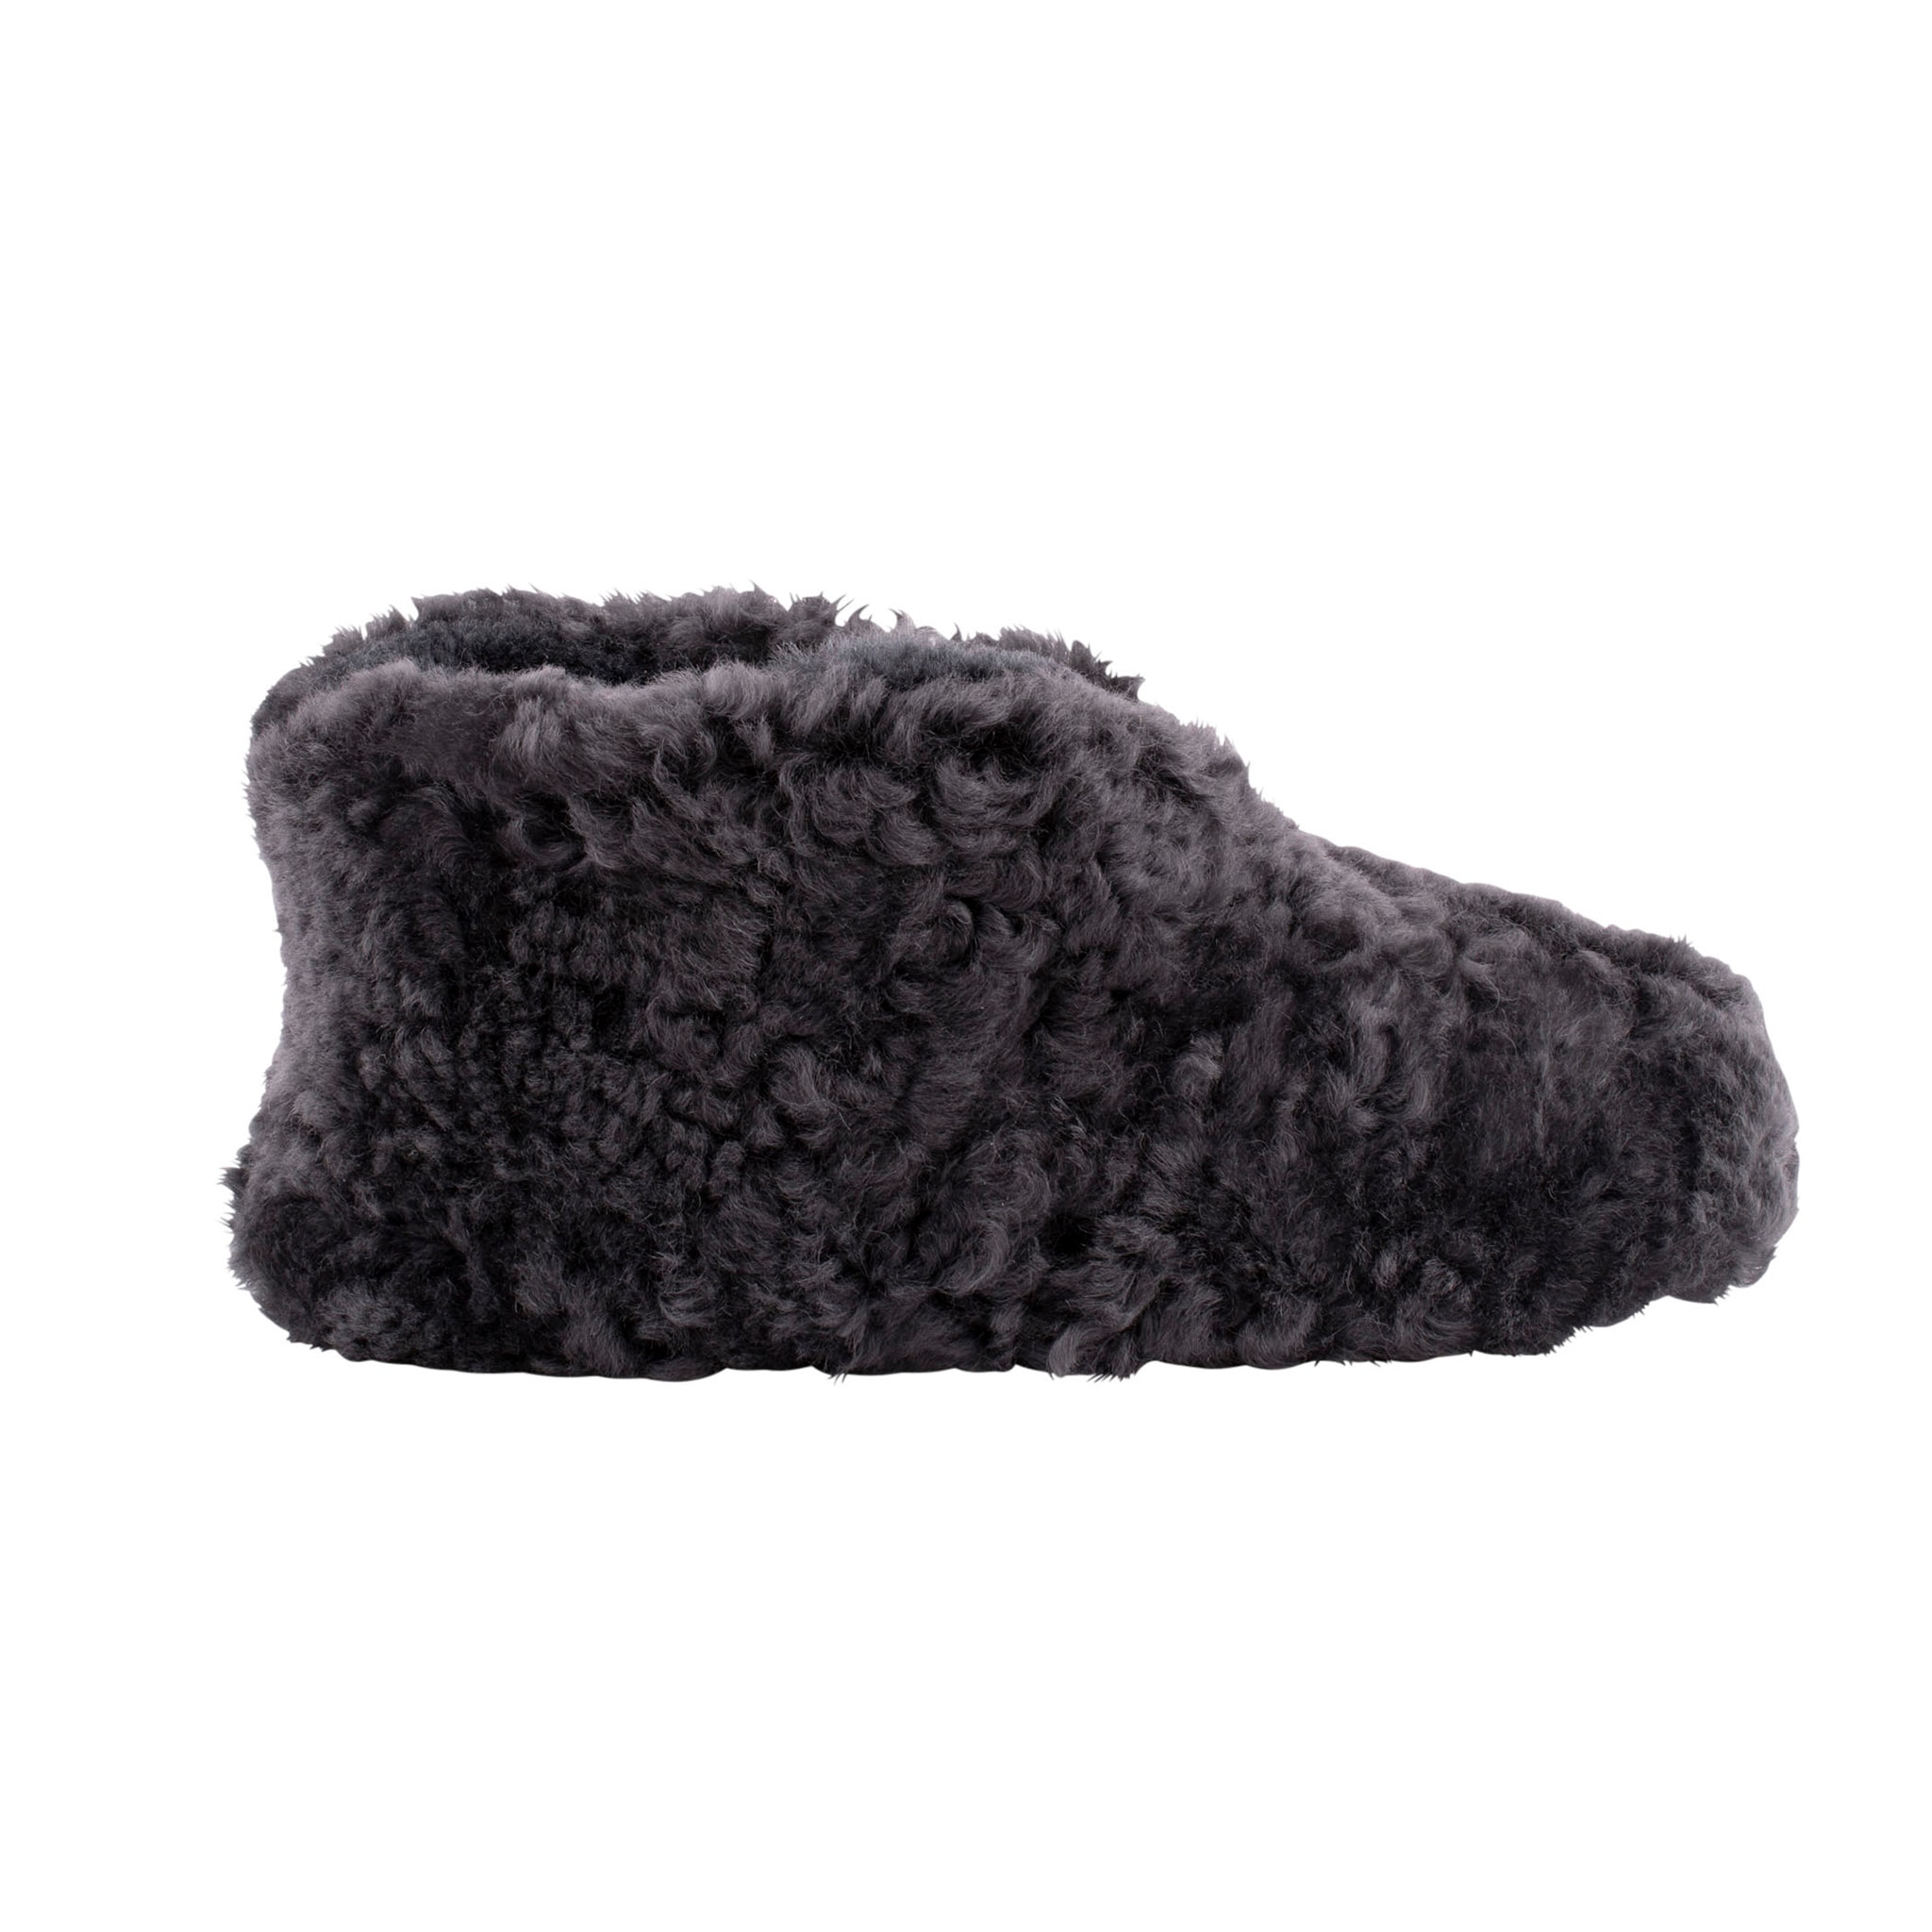 Shepherd Ulla are a pair of soft ankel high sheepskin slippers.